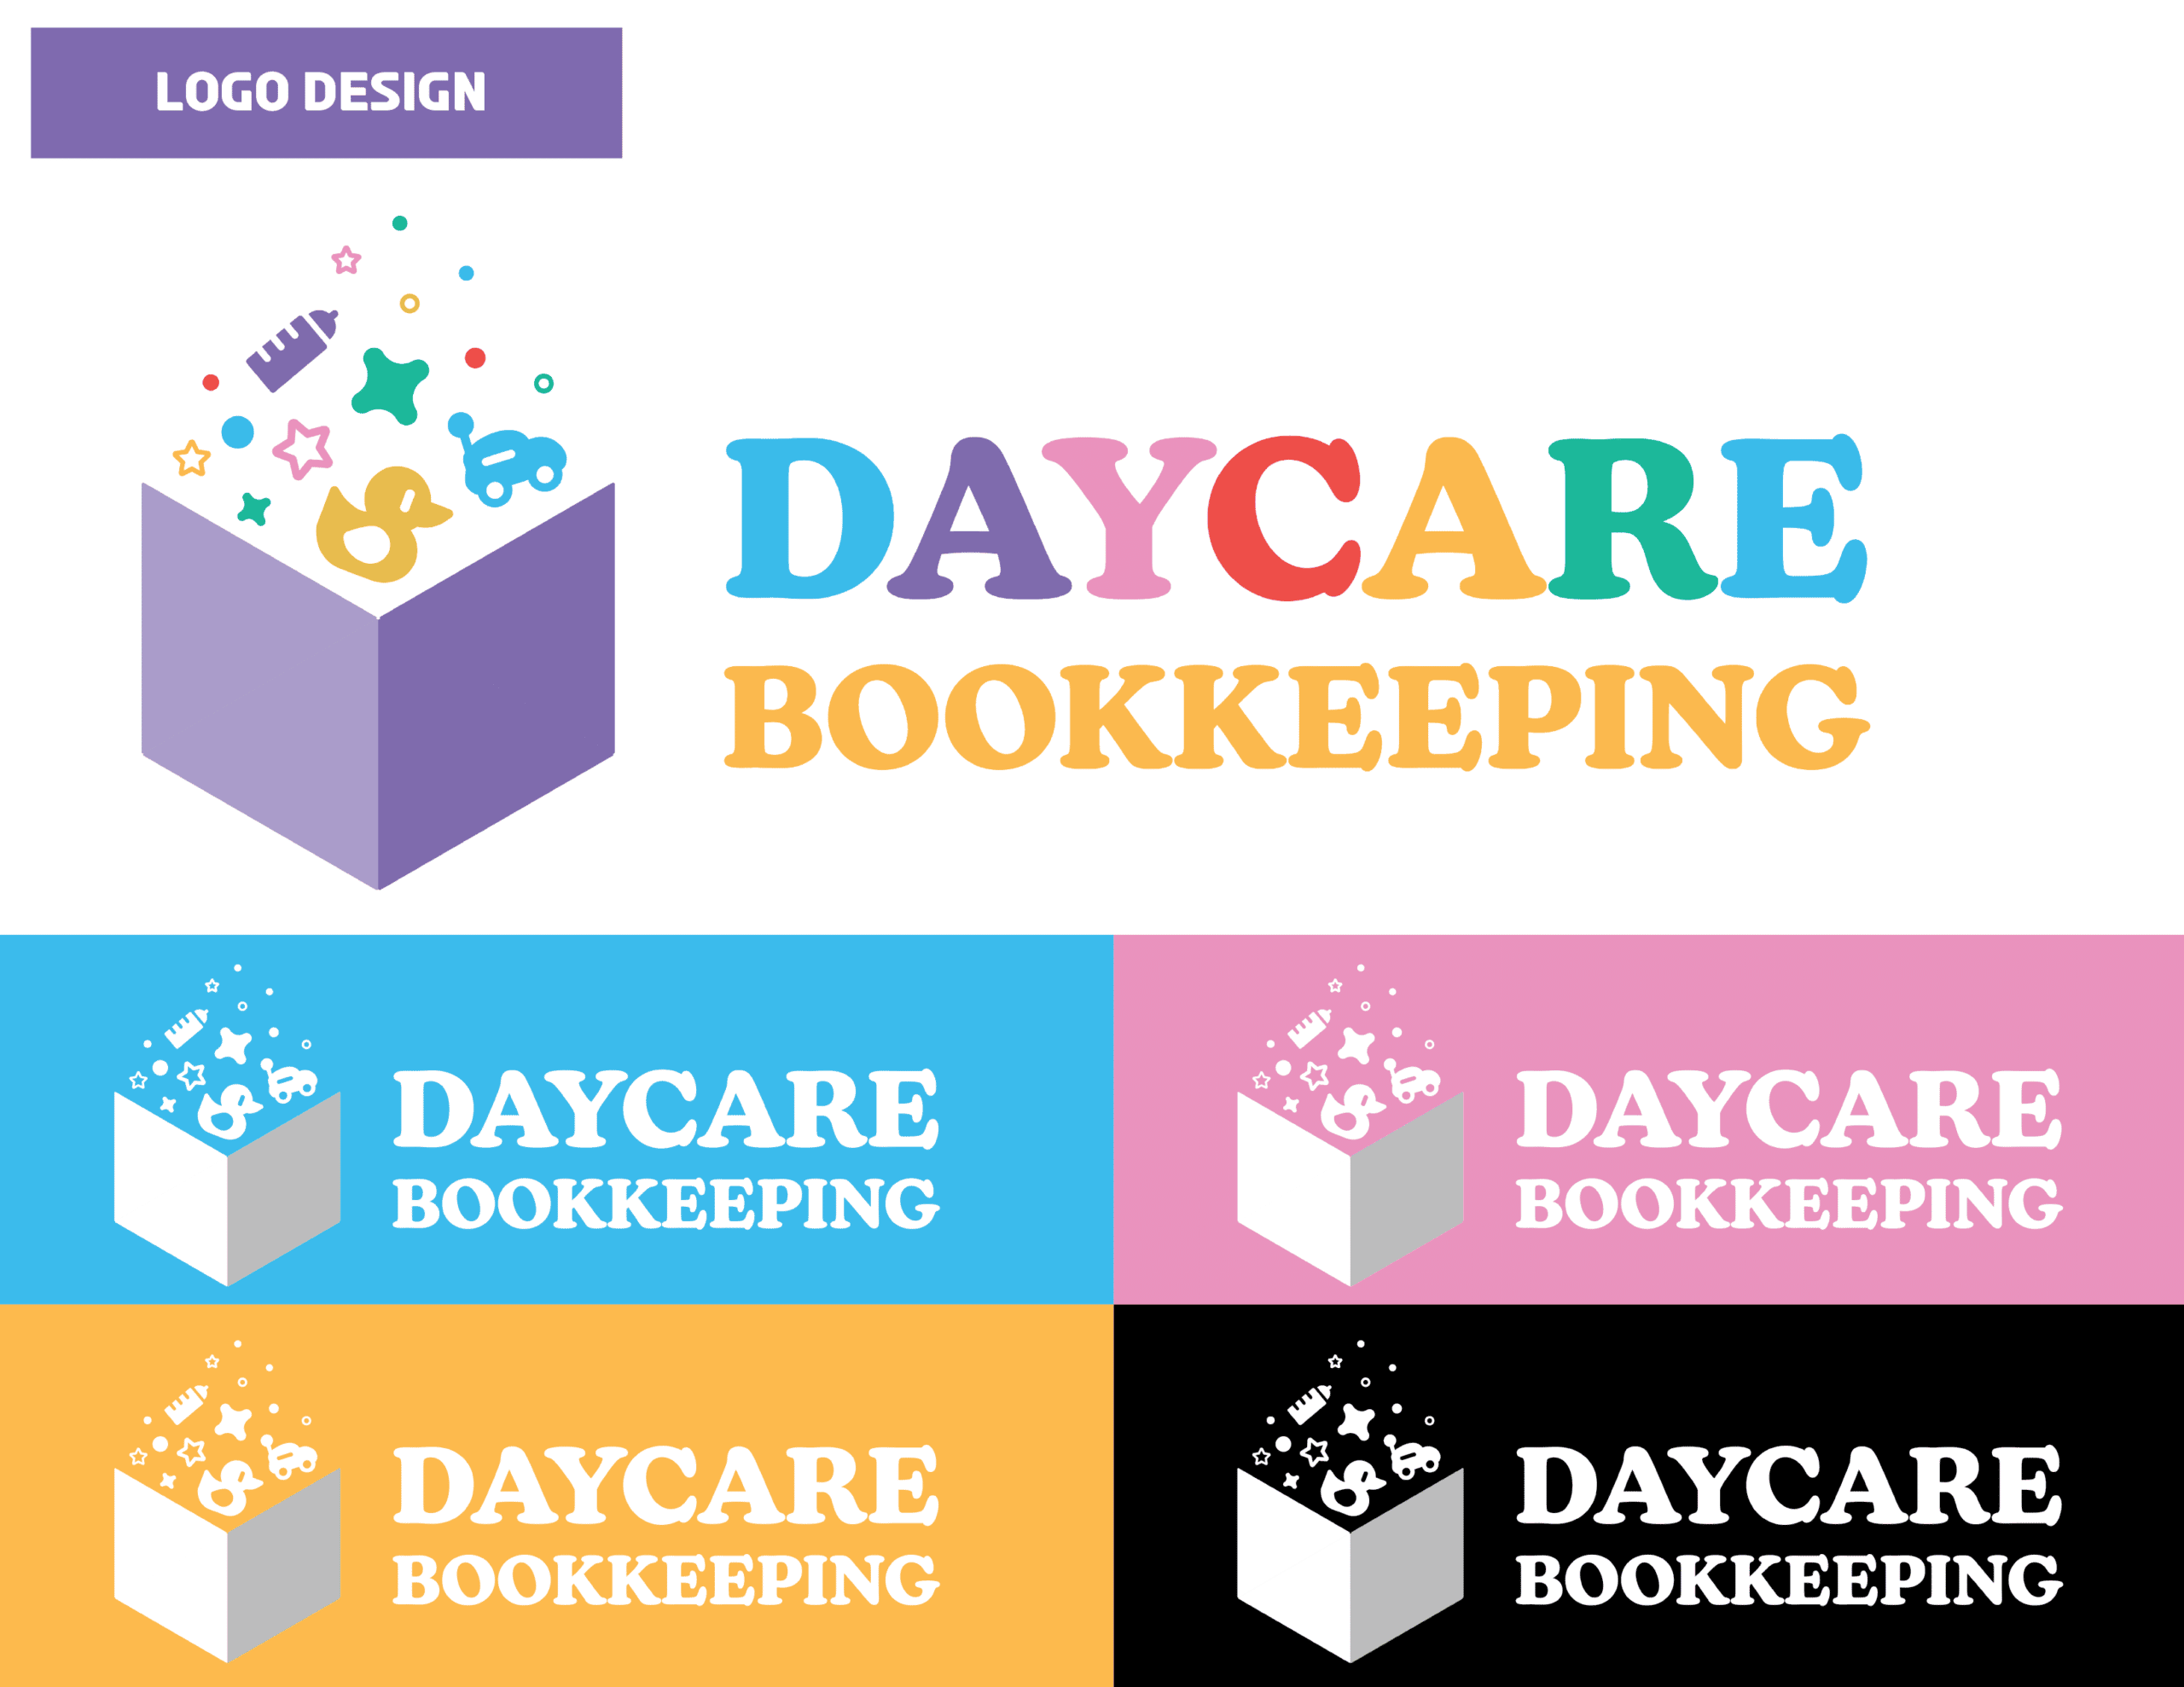 01_DaycareBookkeeping_Logo Design